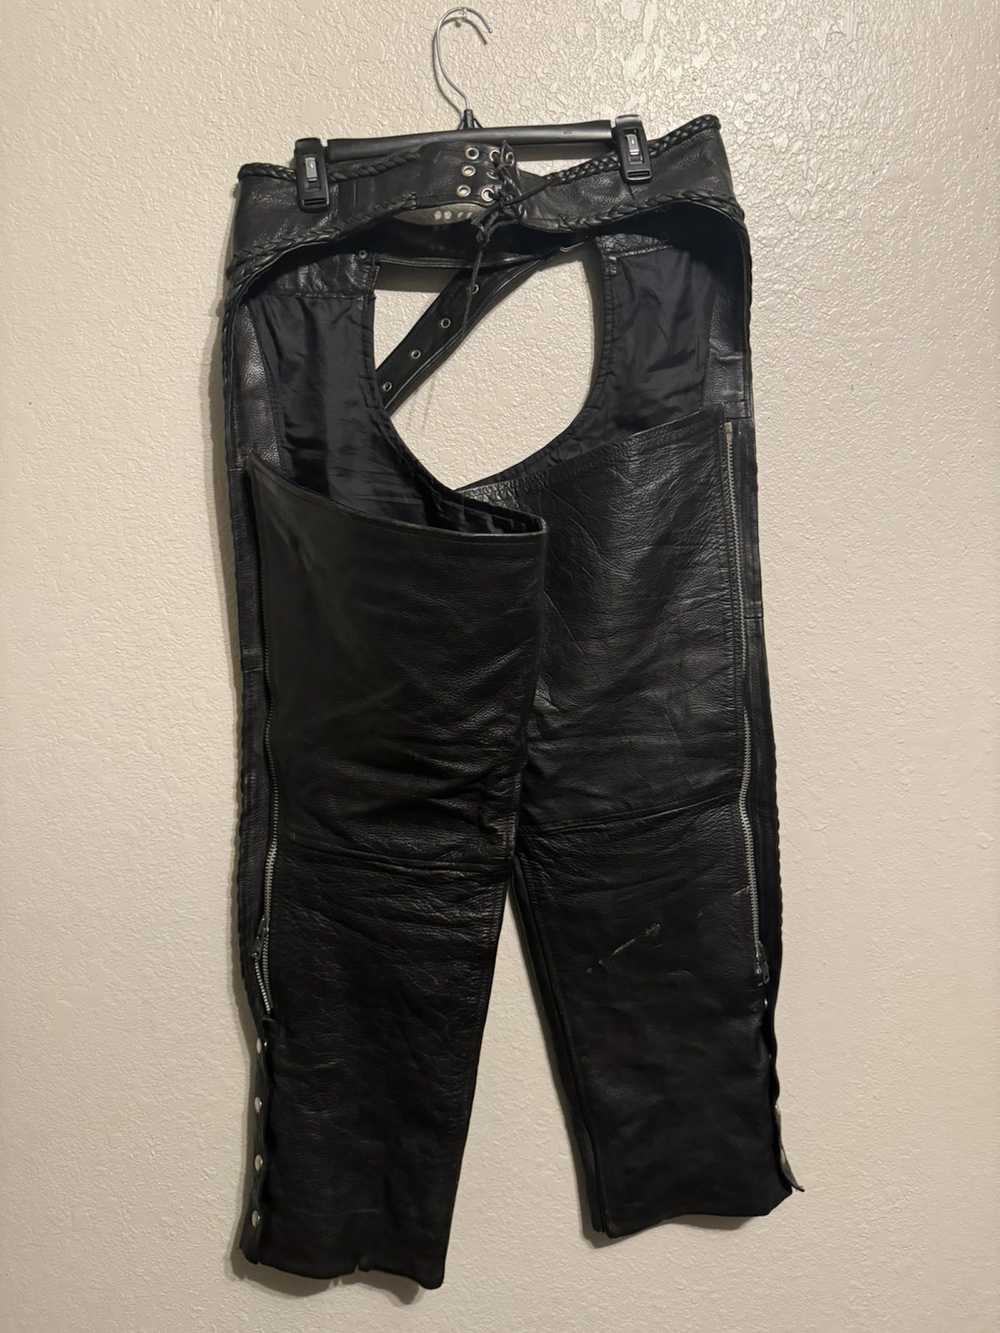 Vintage Black Leather Chaps - image 2